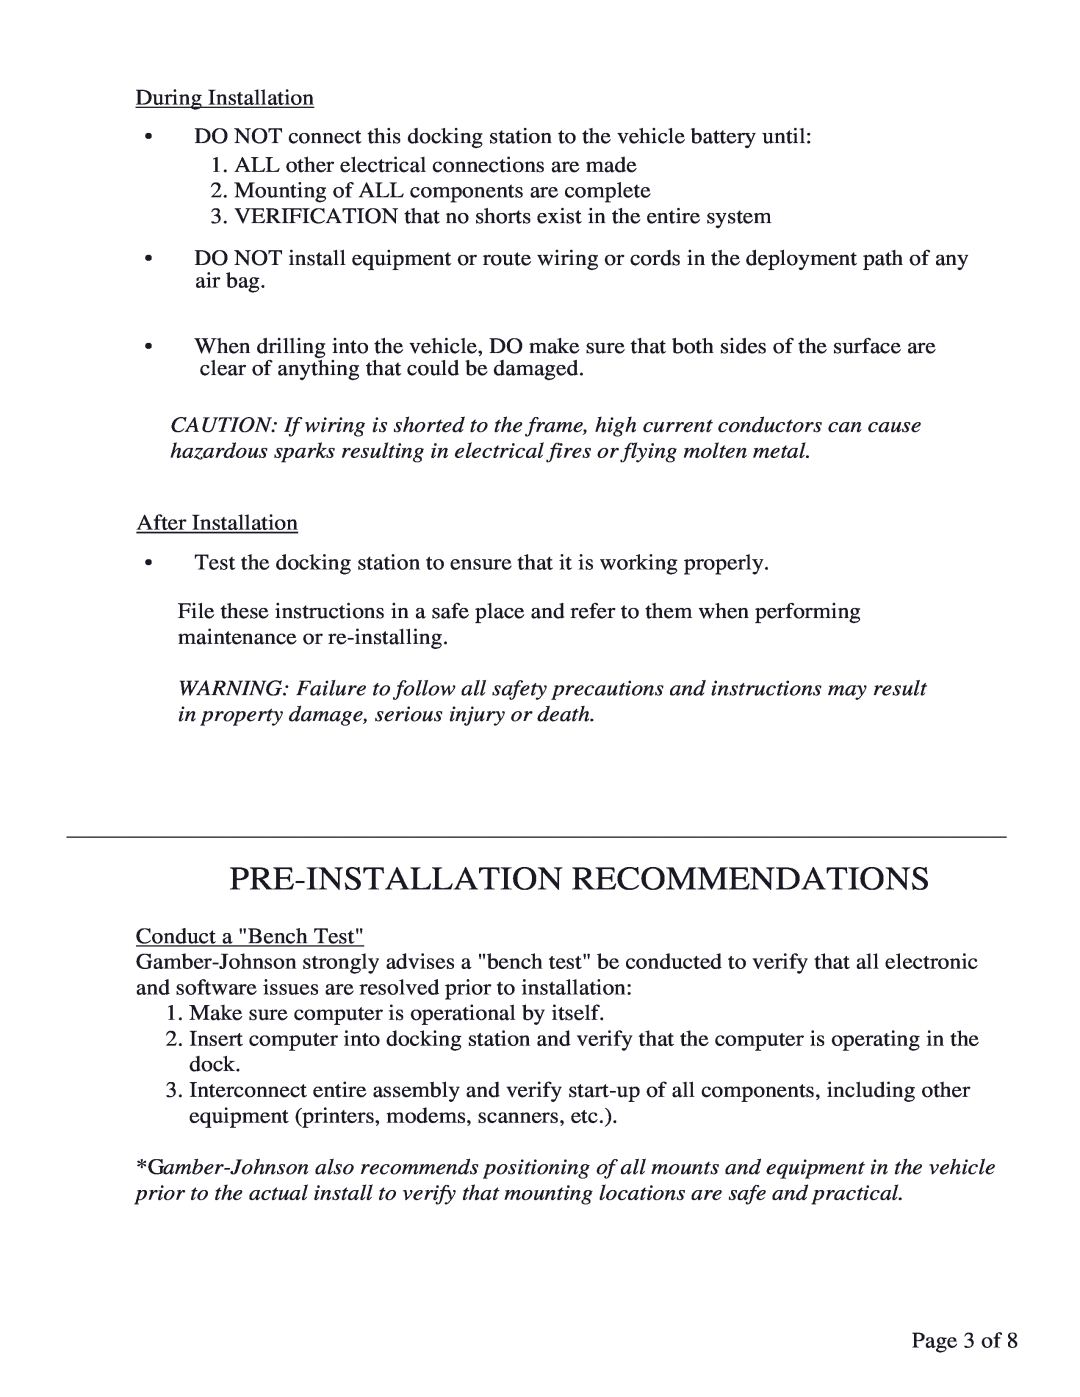 Gamber Johnson 7160-0526-00, 7160-0526-02 installation instructions Pre-Installation Recommendations 